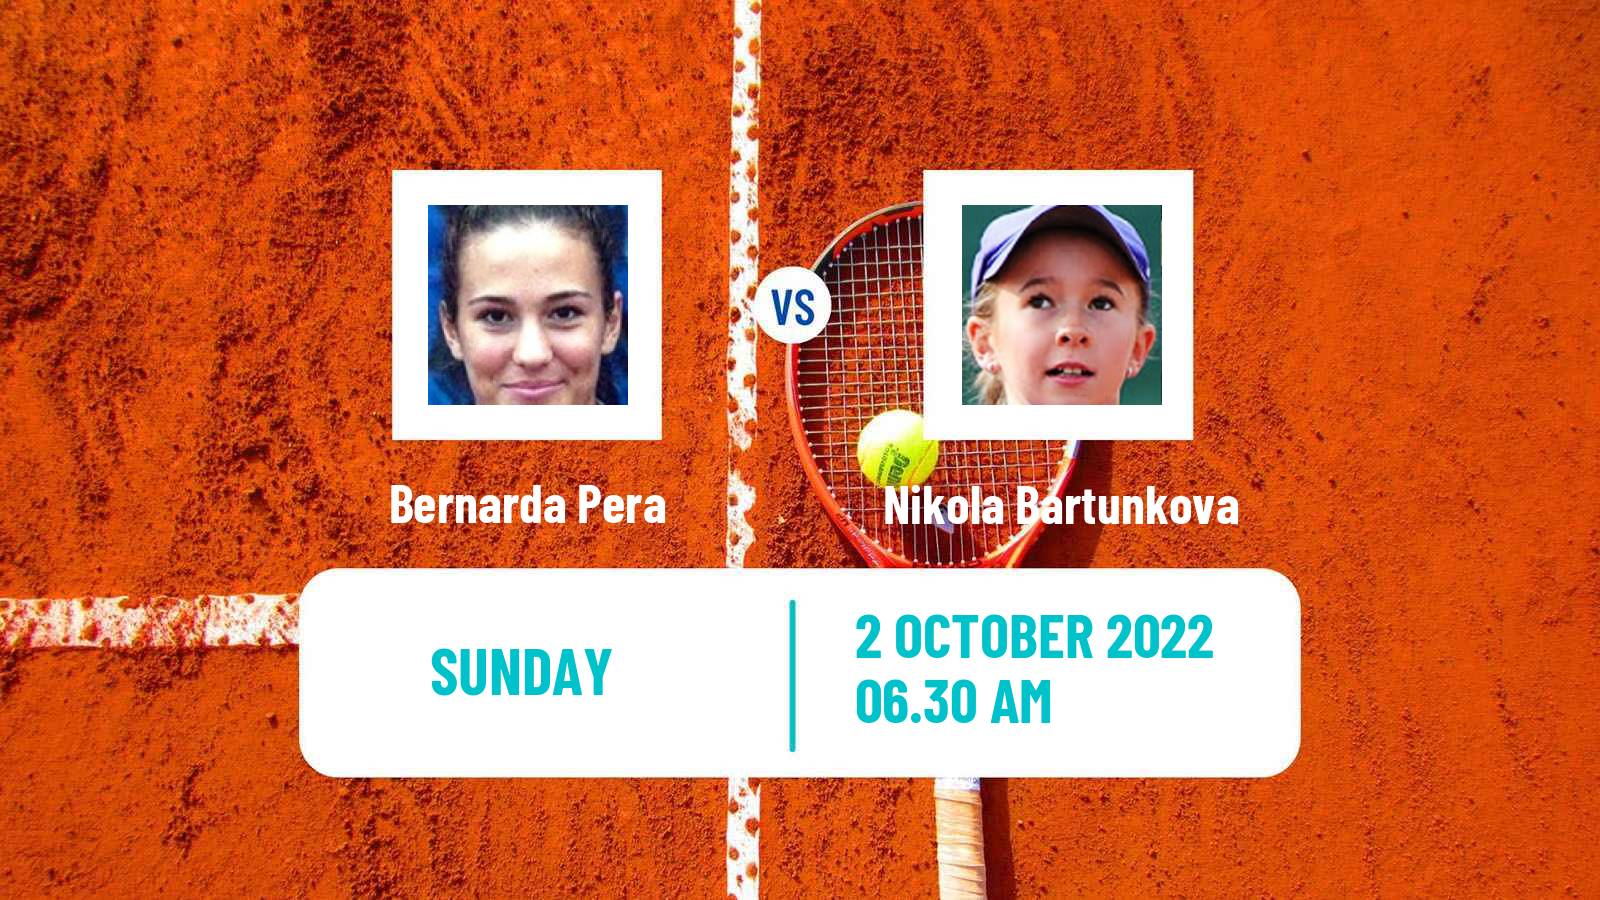 Tennis WTA Ostrava Bernarda Pera - Nikola Bartunkova